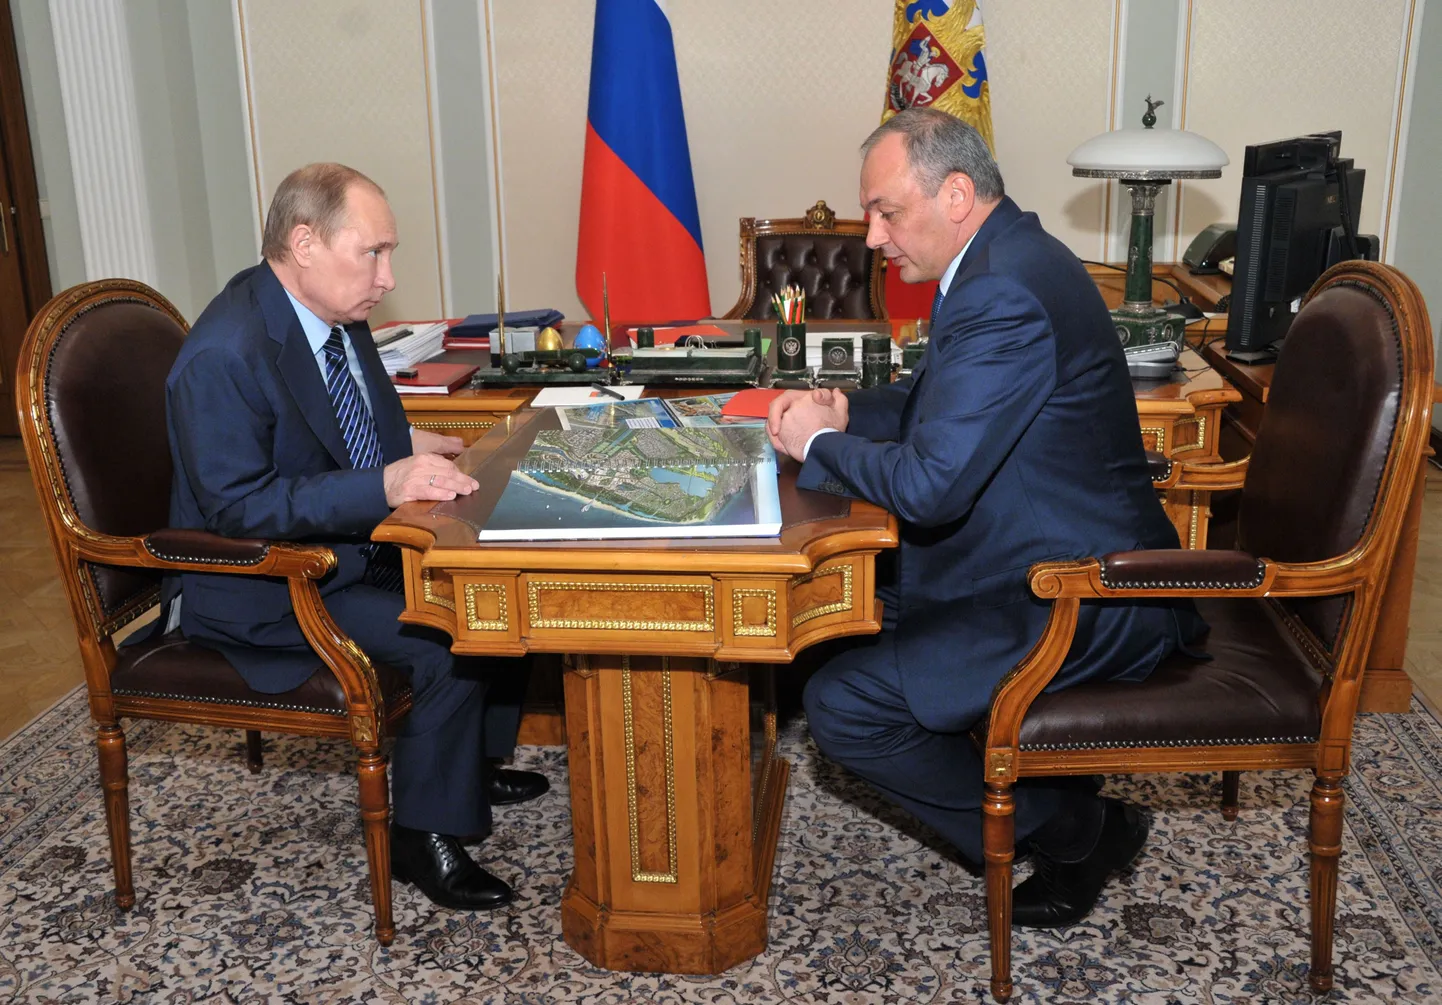 Vene president Vladimir Putin (vasakul)  oma Novo-Ogorjovo residentsis koos Dagestani juhiga Magomedsalam Magomedoviga. Foto on tehtud mullu mais.